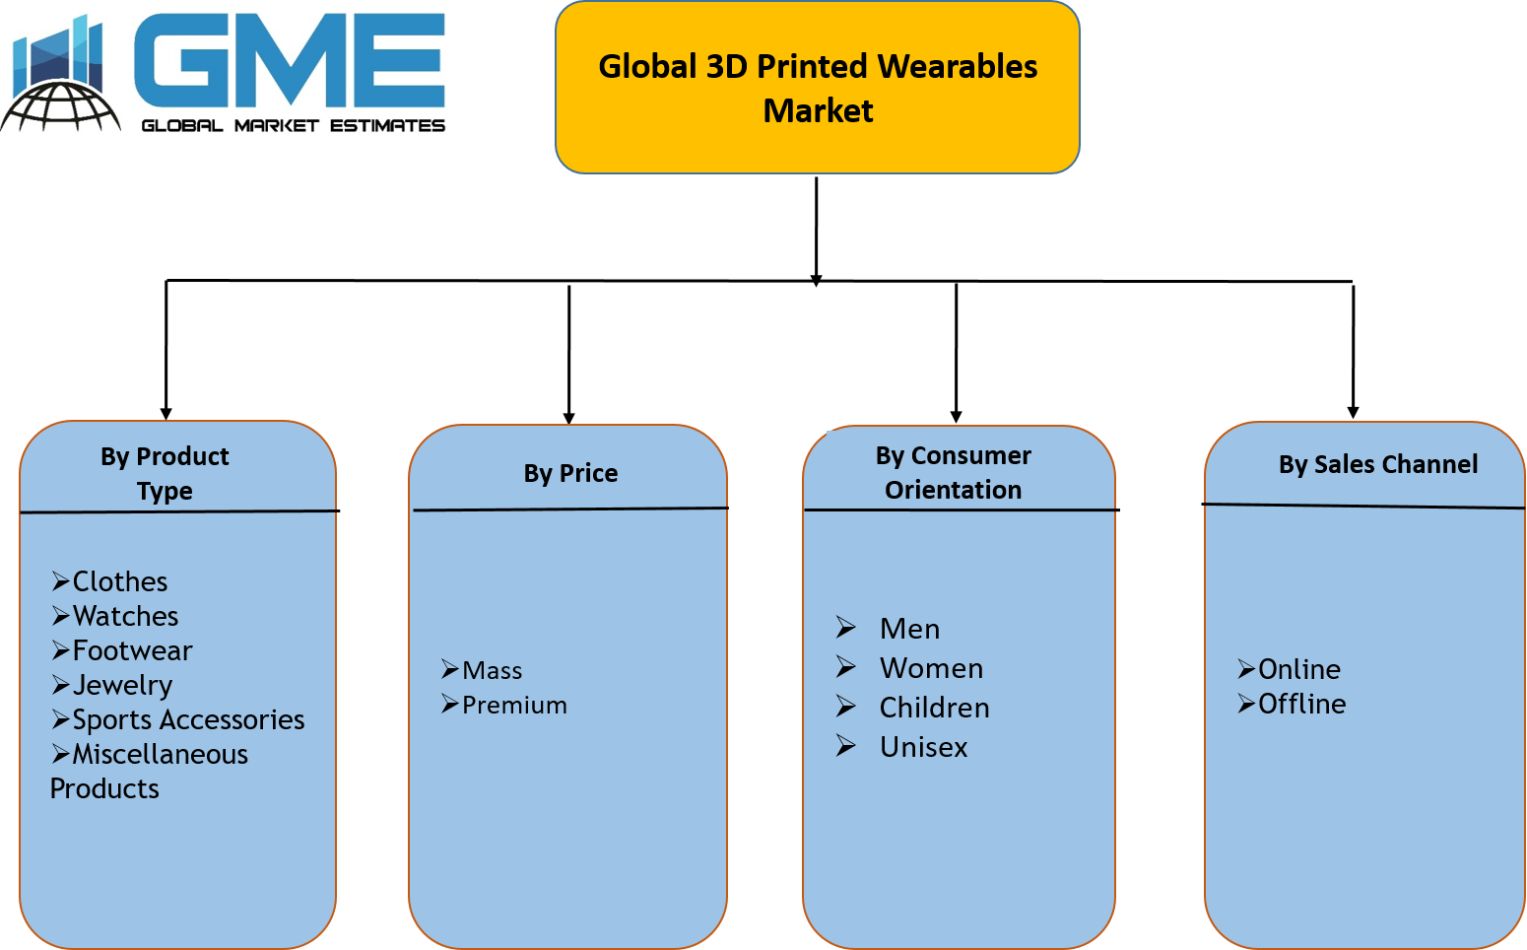 Global 3D Printed Wearables Market Segmentation